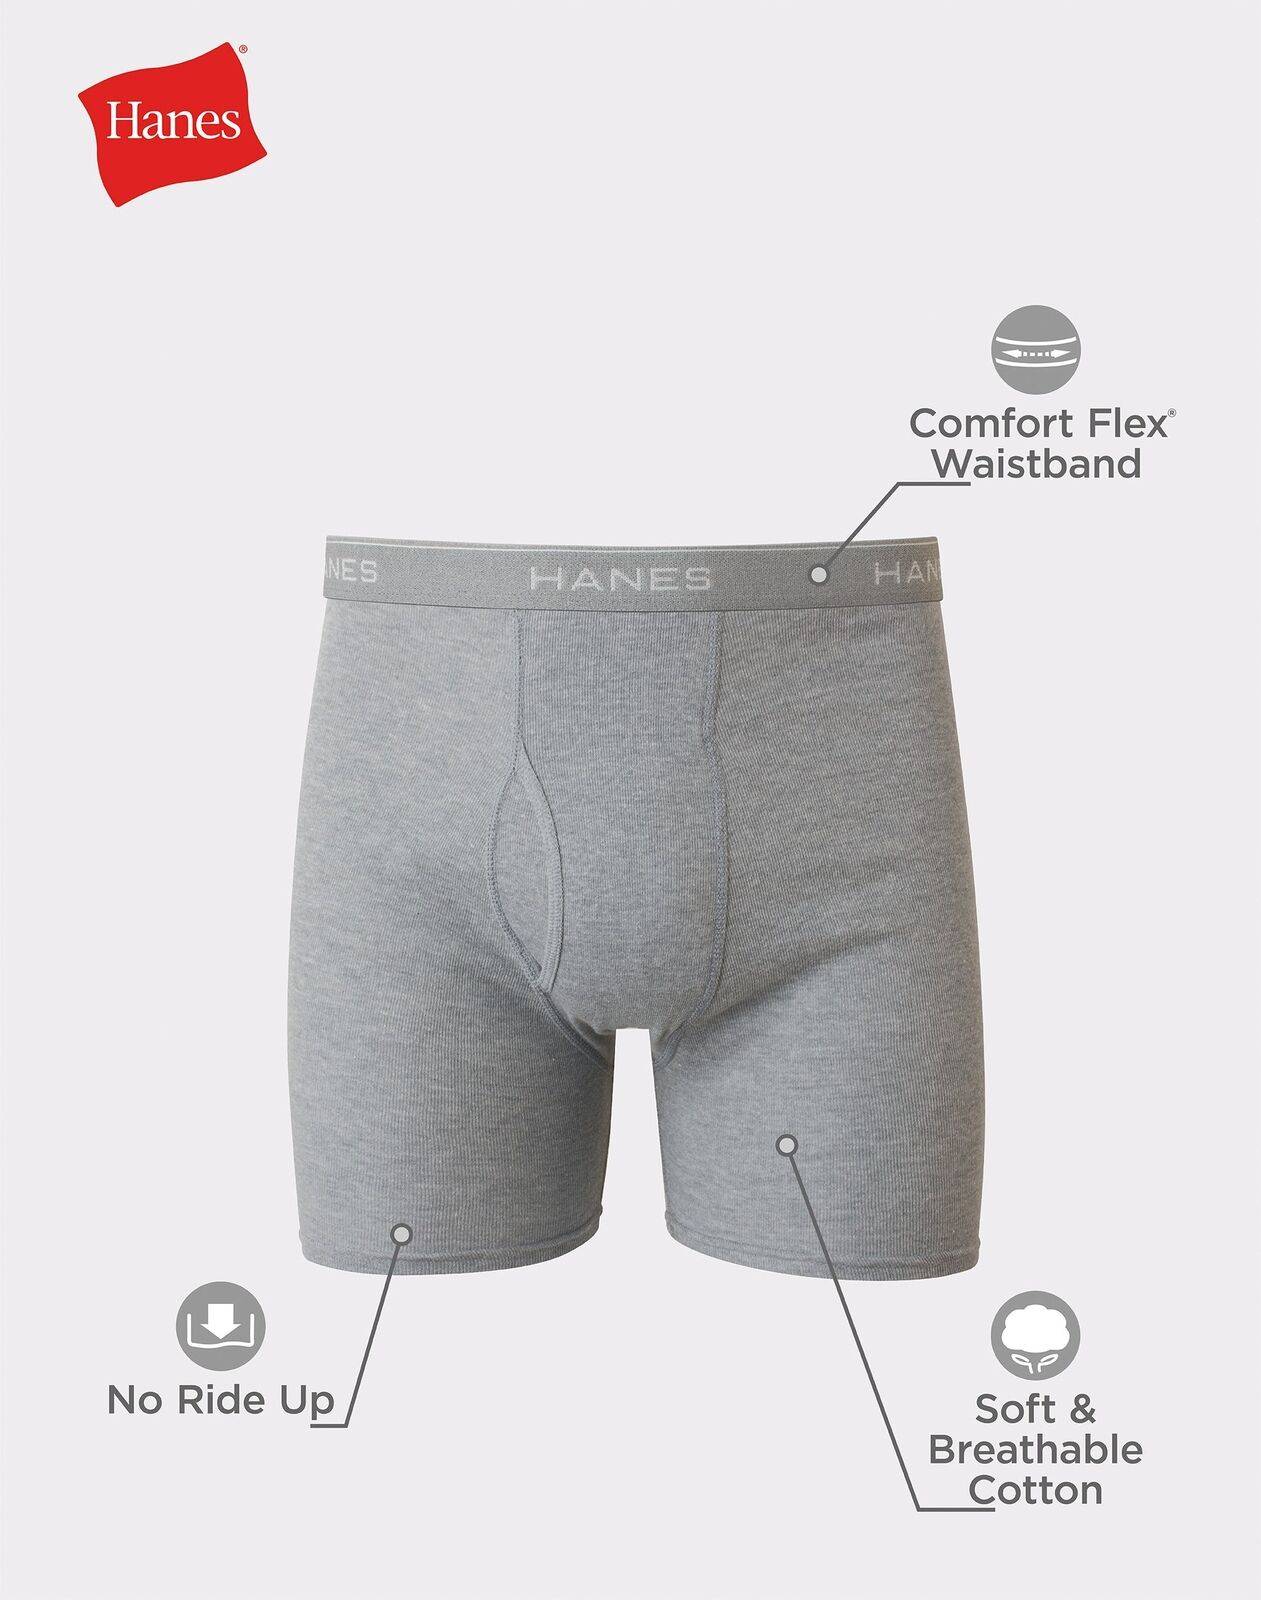 Hanes® Comfort Flex Briefs Men's Color Briefs Underwear, 3 or 6 Pack S-3XL